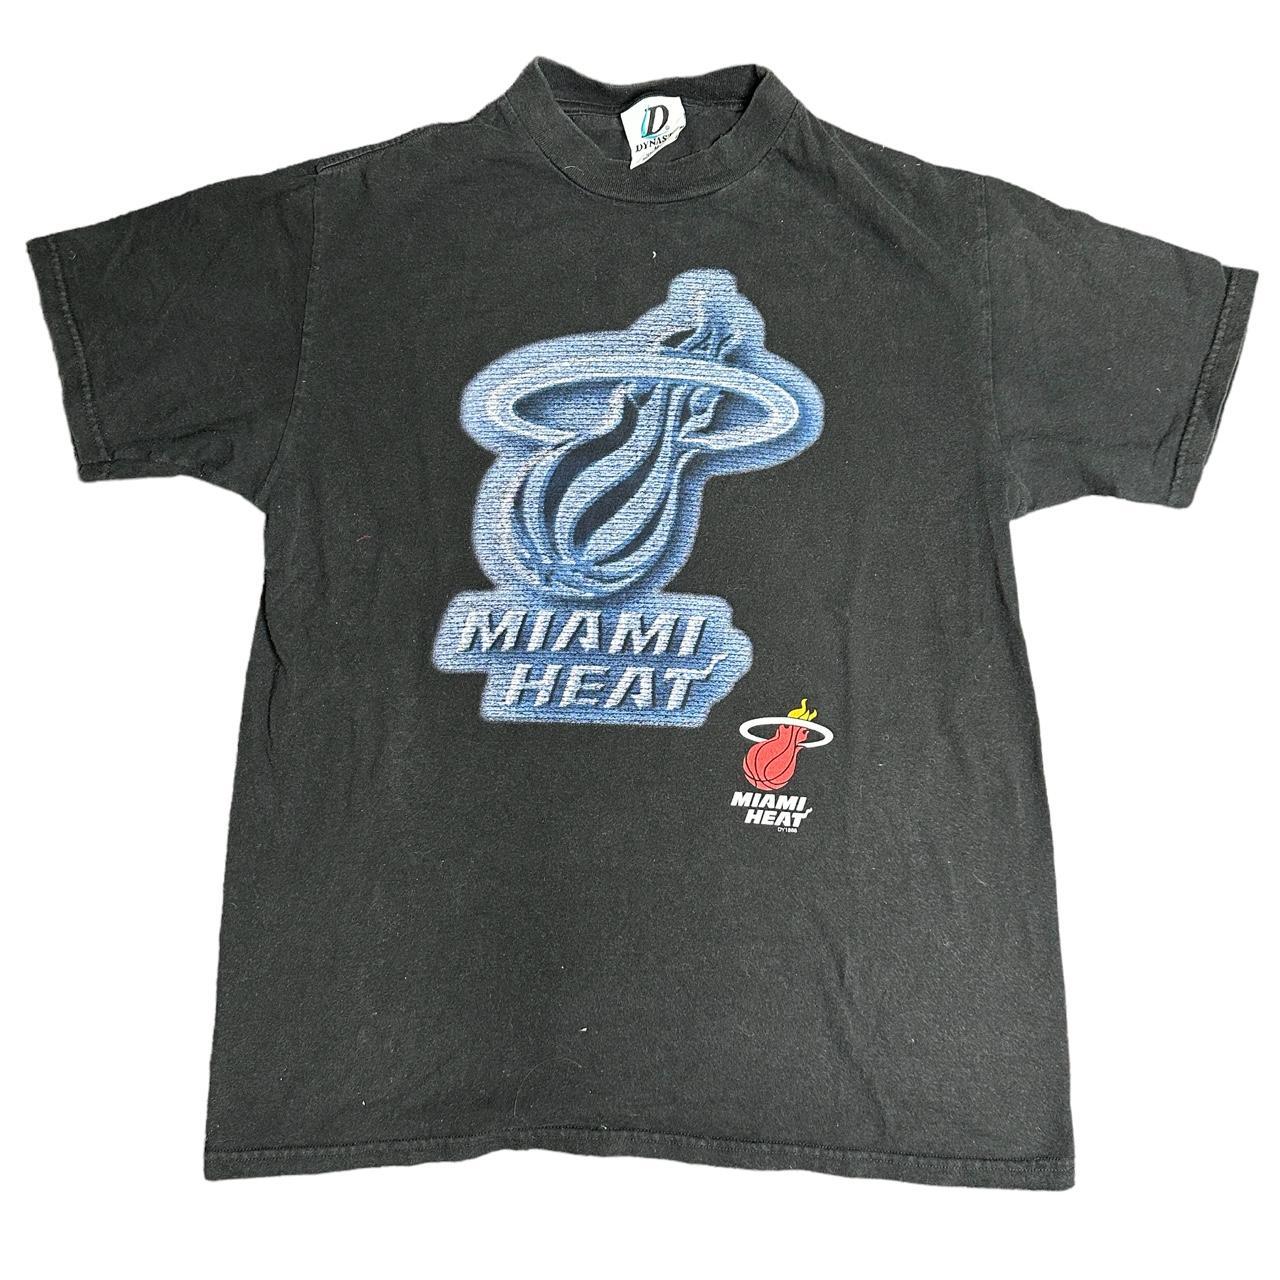 NBA Men's Blue and Black T-shirt